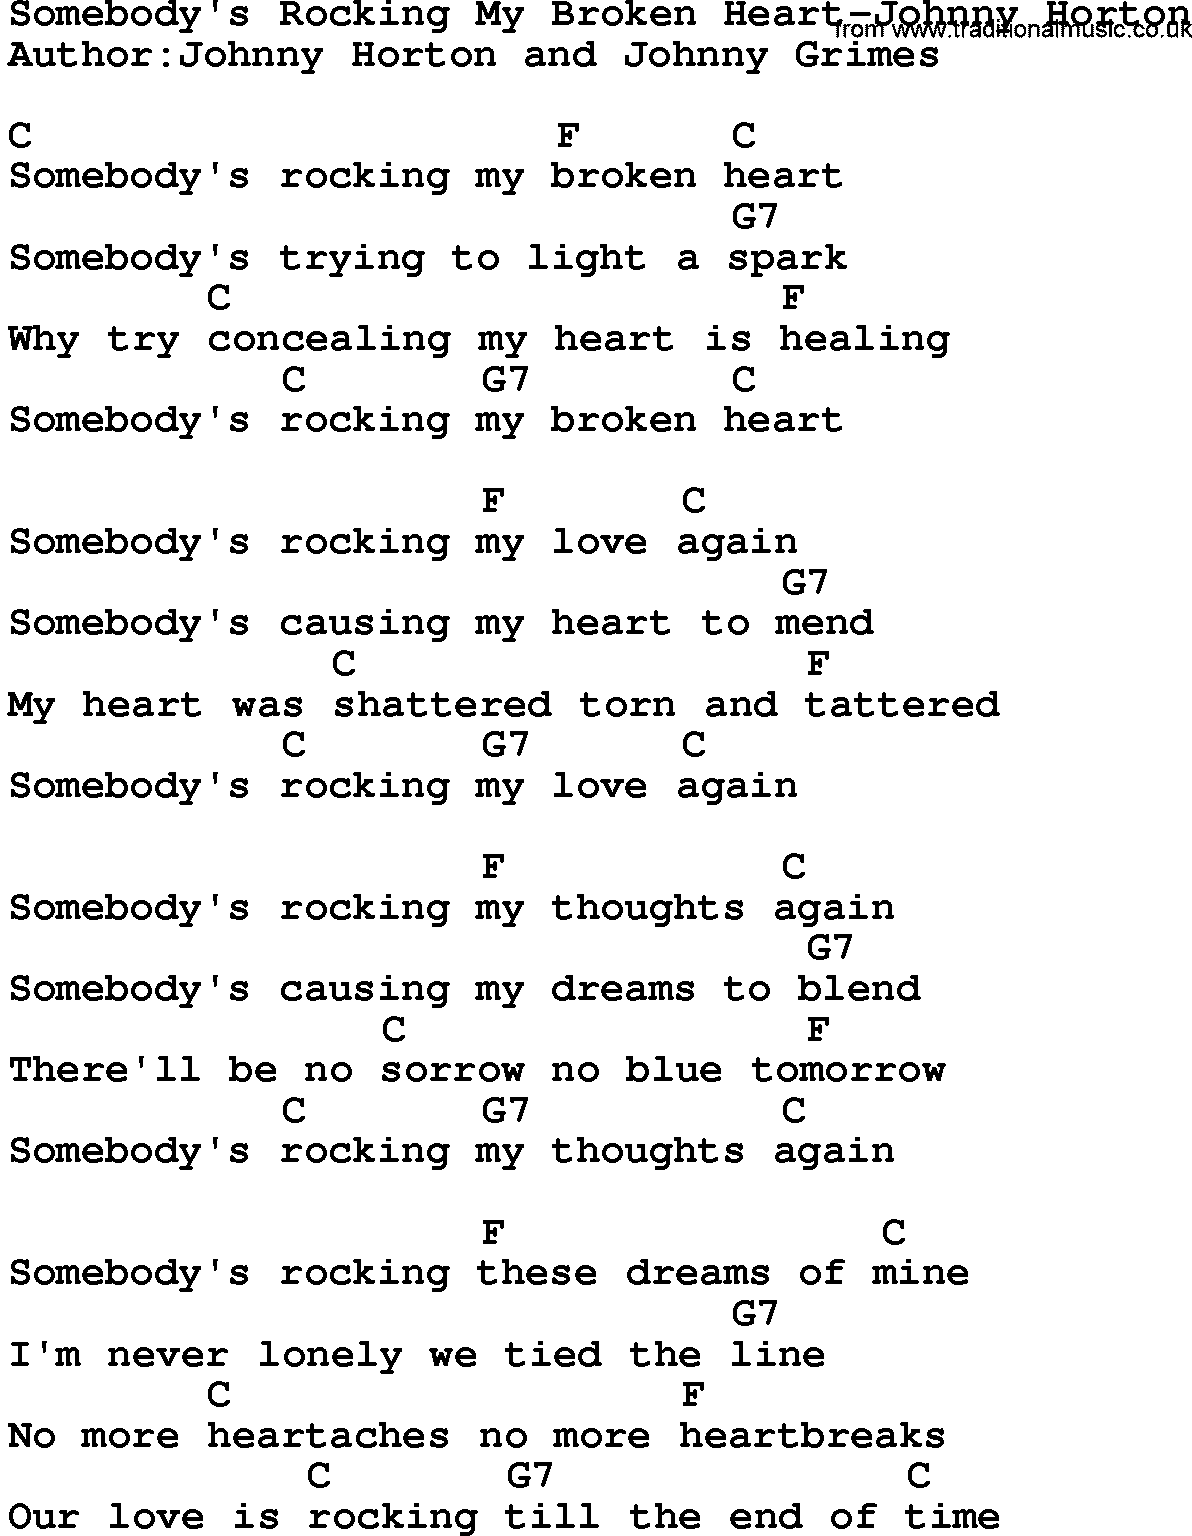 Country music song: Somebody's Rocking My Broken Heart-Johnny Horton lyrics and chords